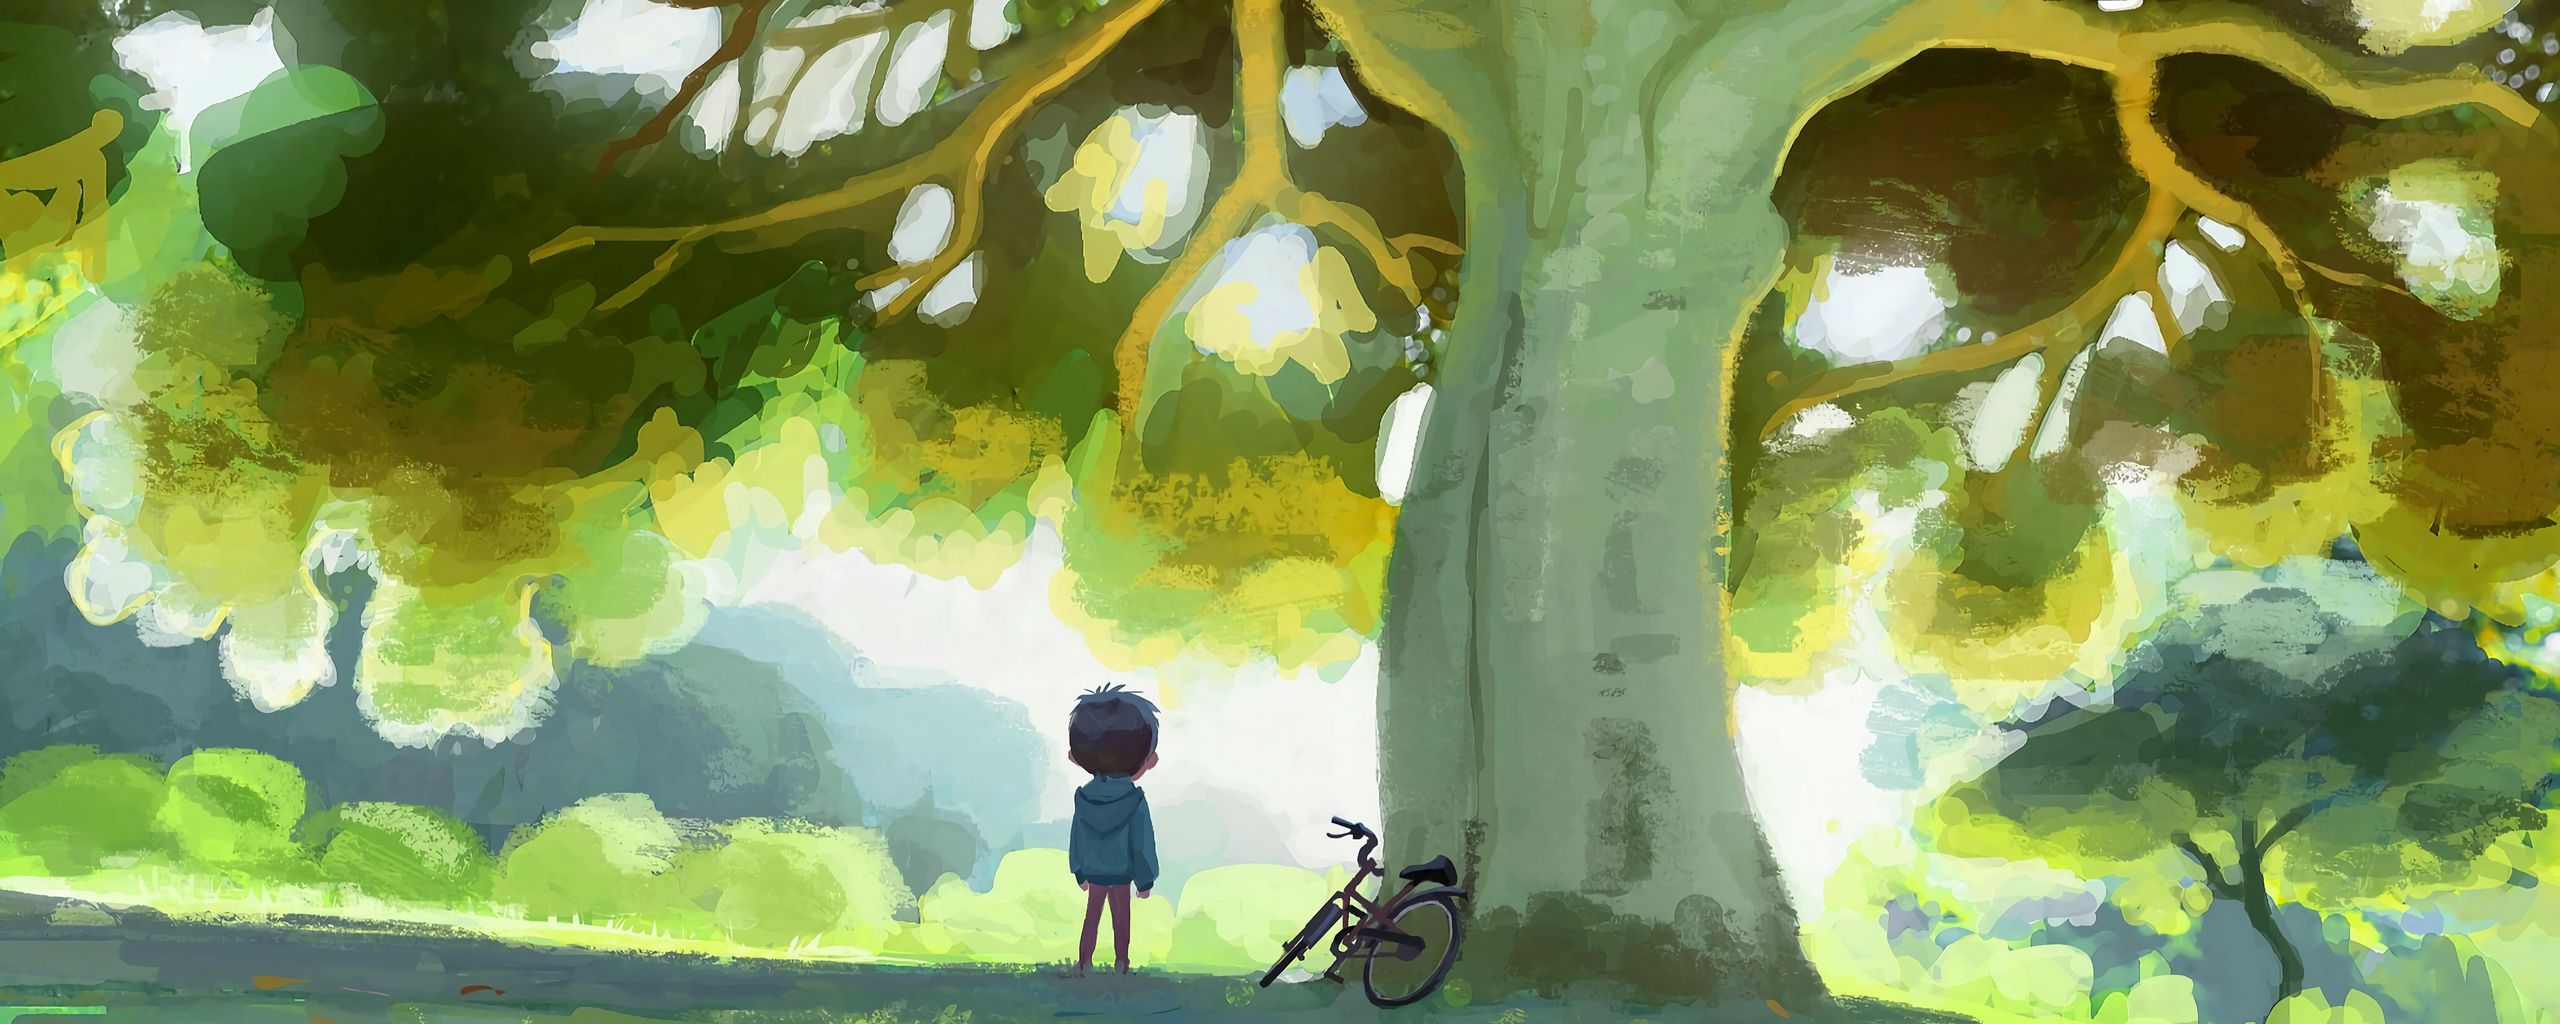 2560x1024 Обои ребенок, велосипед, дерево, природа, арт